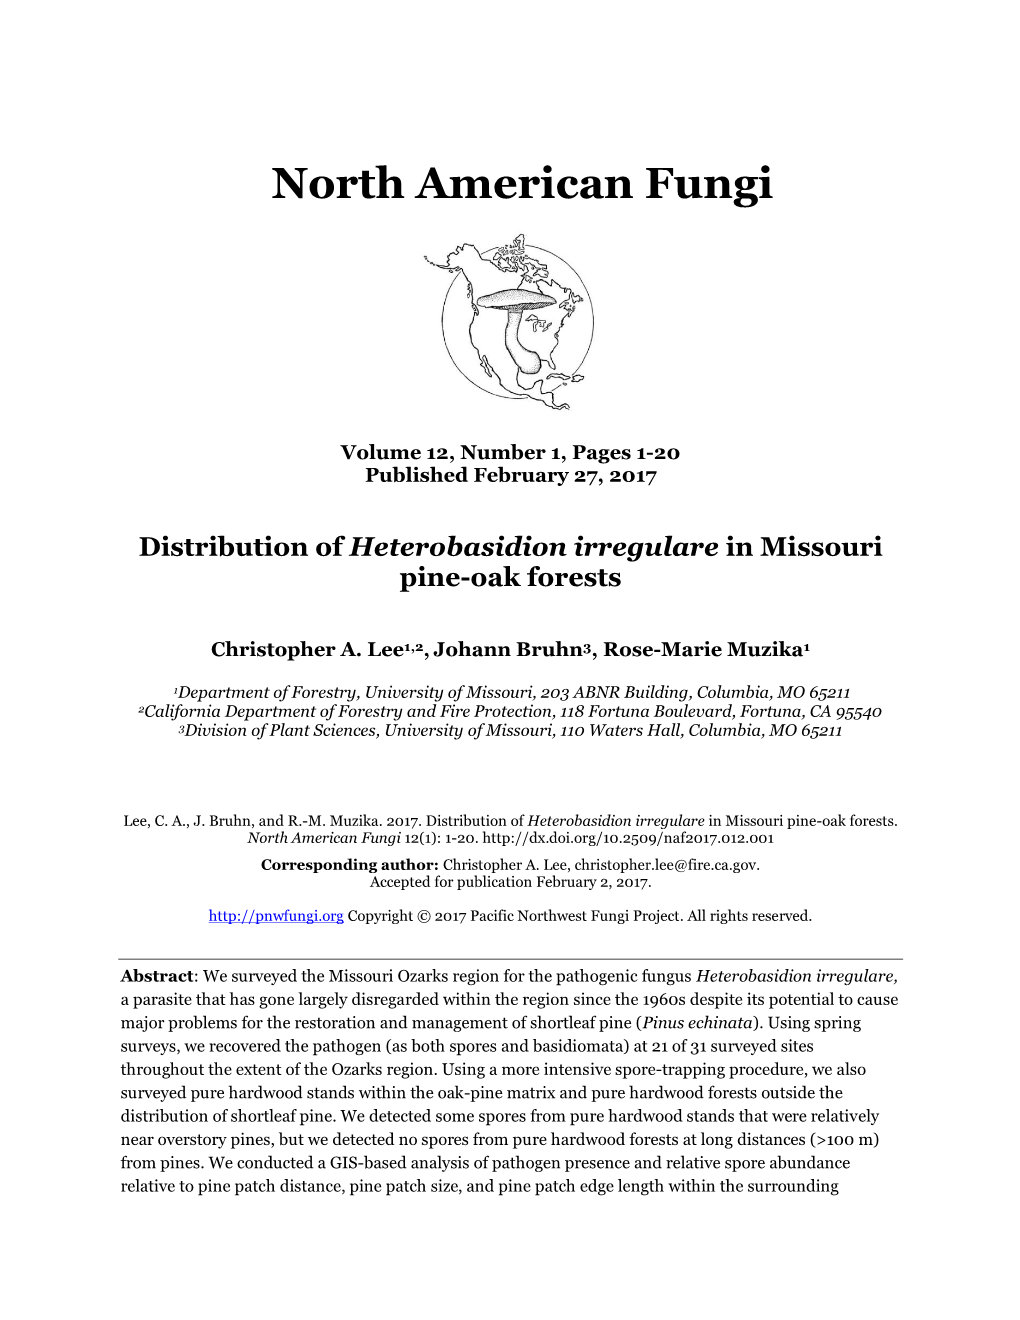 Distribution of Heterobasidion Irregulare in Missouri Pine-Oak Forests